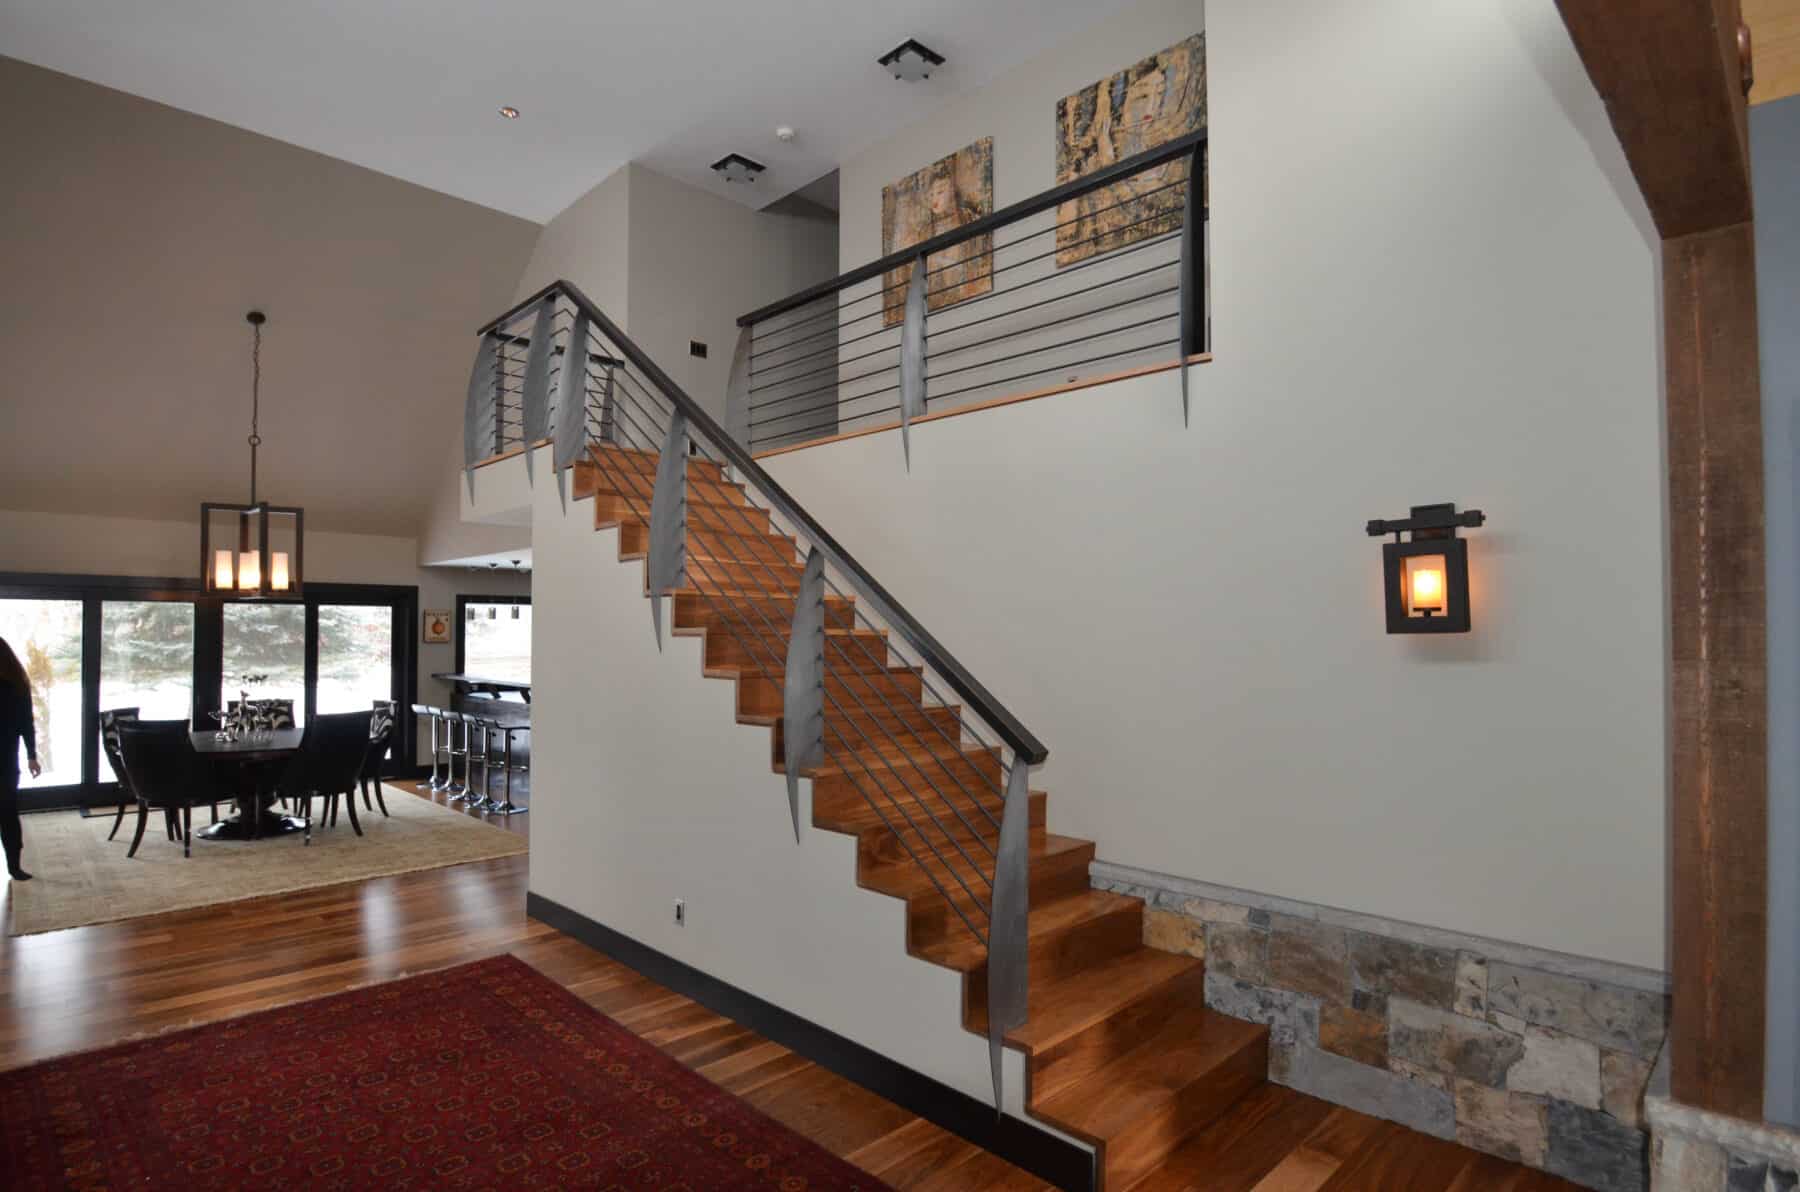 Amazing Custom Art Metal Staircase Railing with No Hardware in Aspen, Colorado Custom Home. Luxury Home Building Interiors